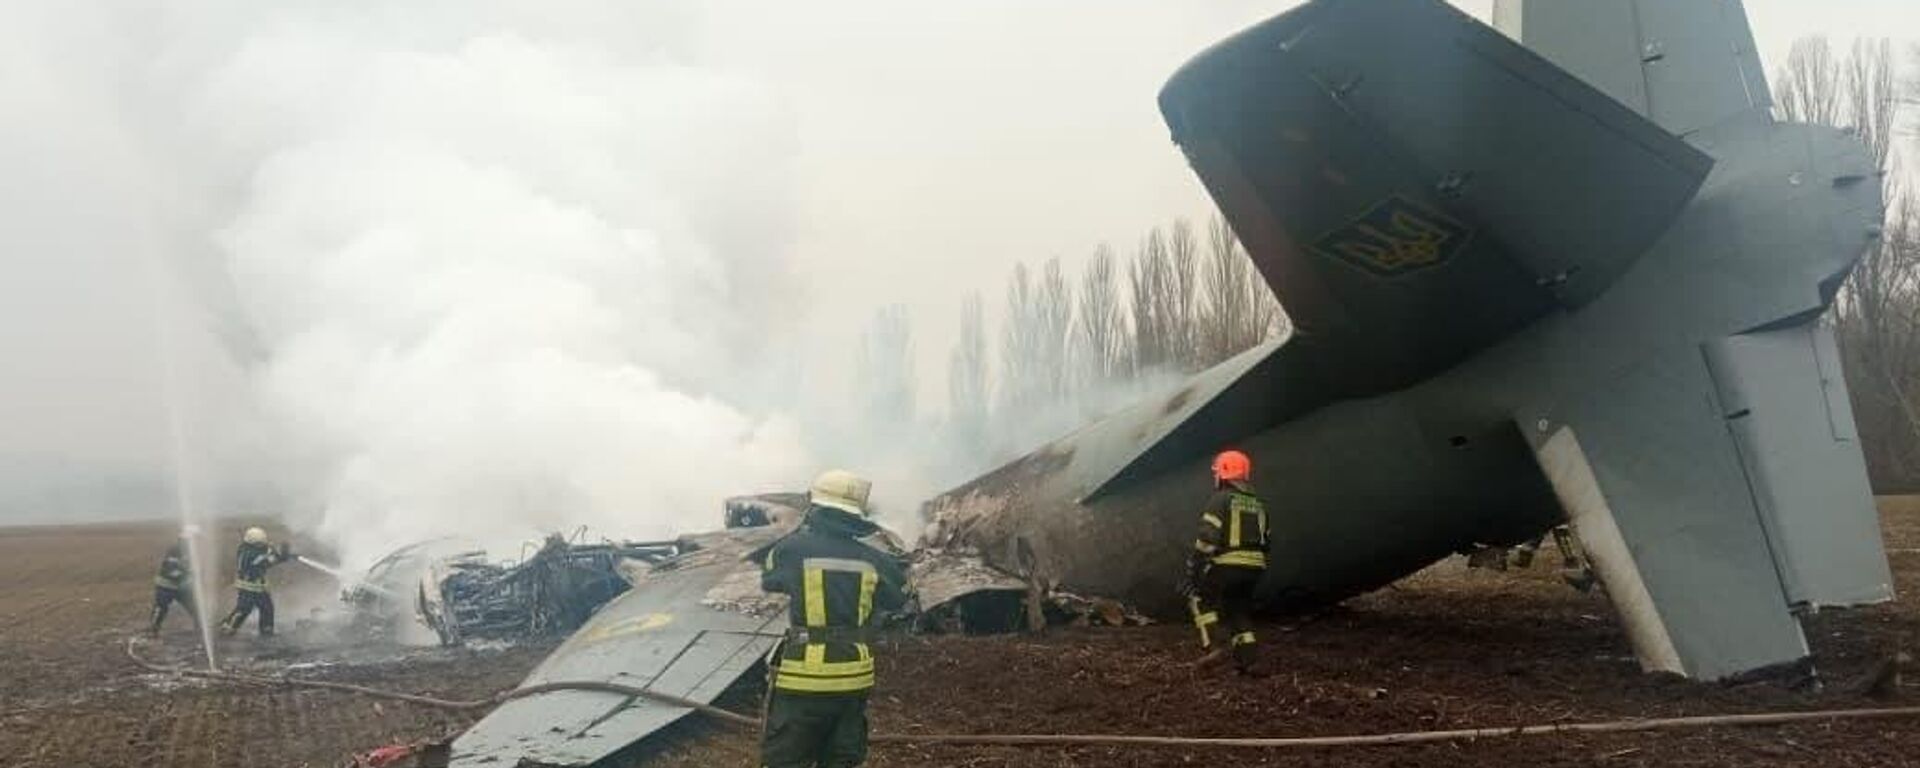  Ukrainian military airplane crashed near Kiev - Sputnik International, 1920, 24.02.2022